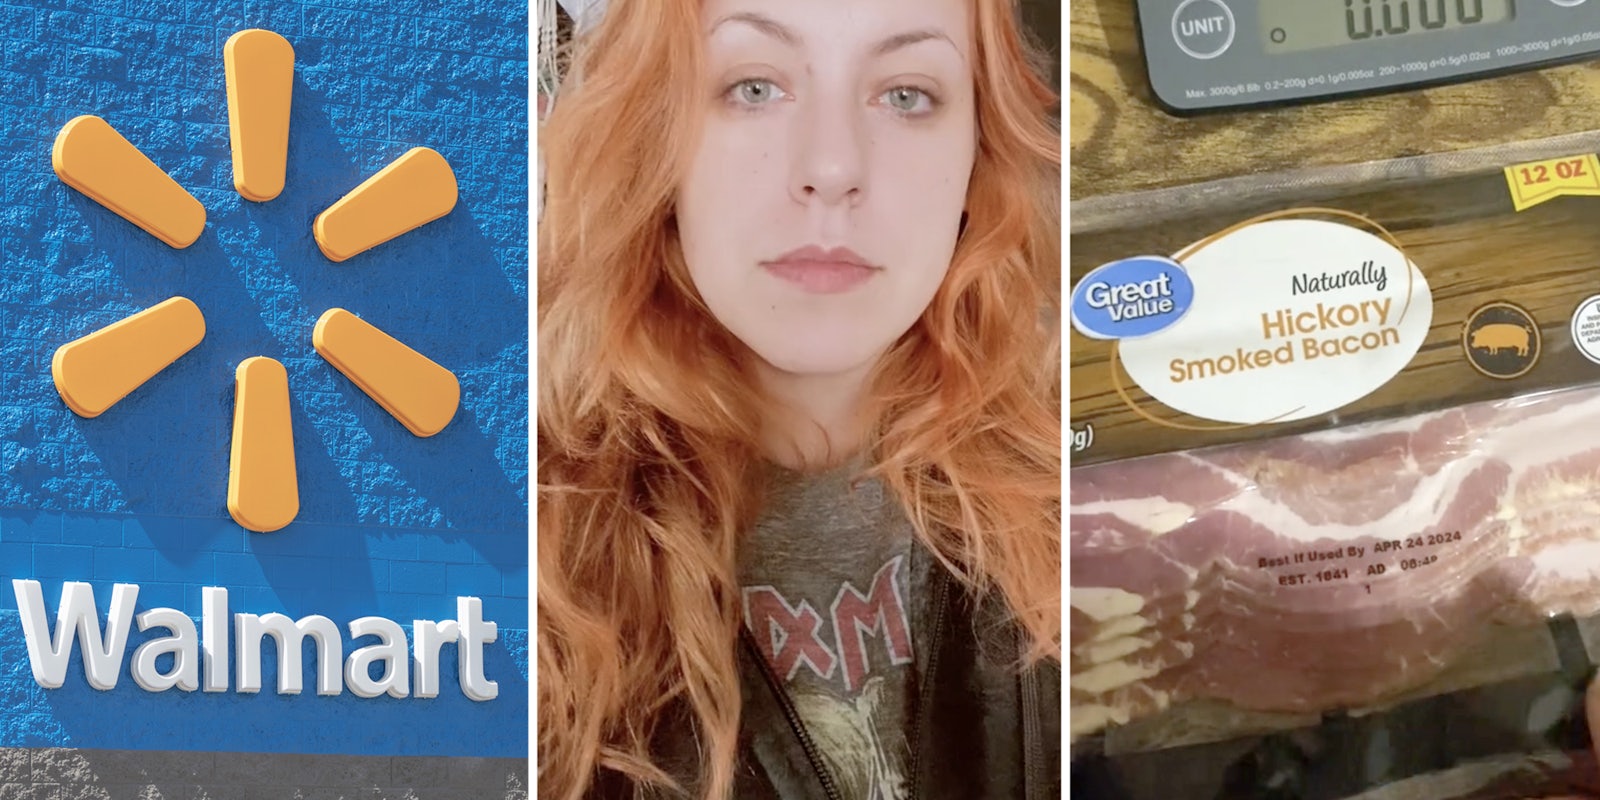 Walmart(l), Woman staring(c), Bacon in packaging(r)